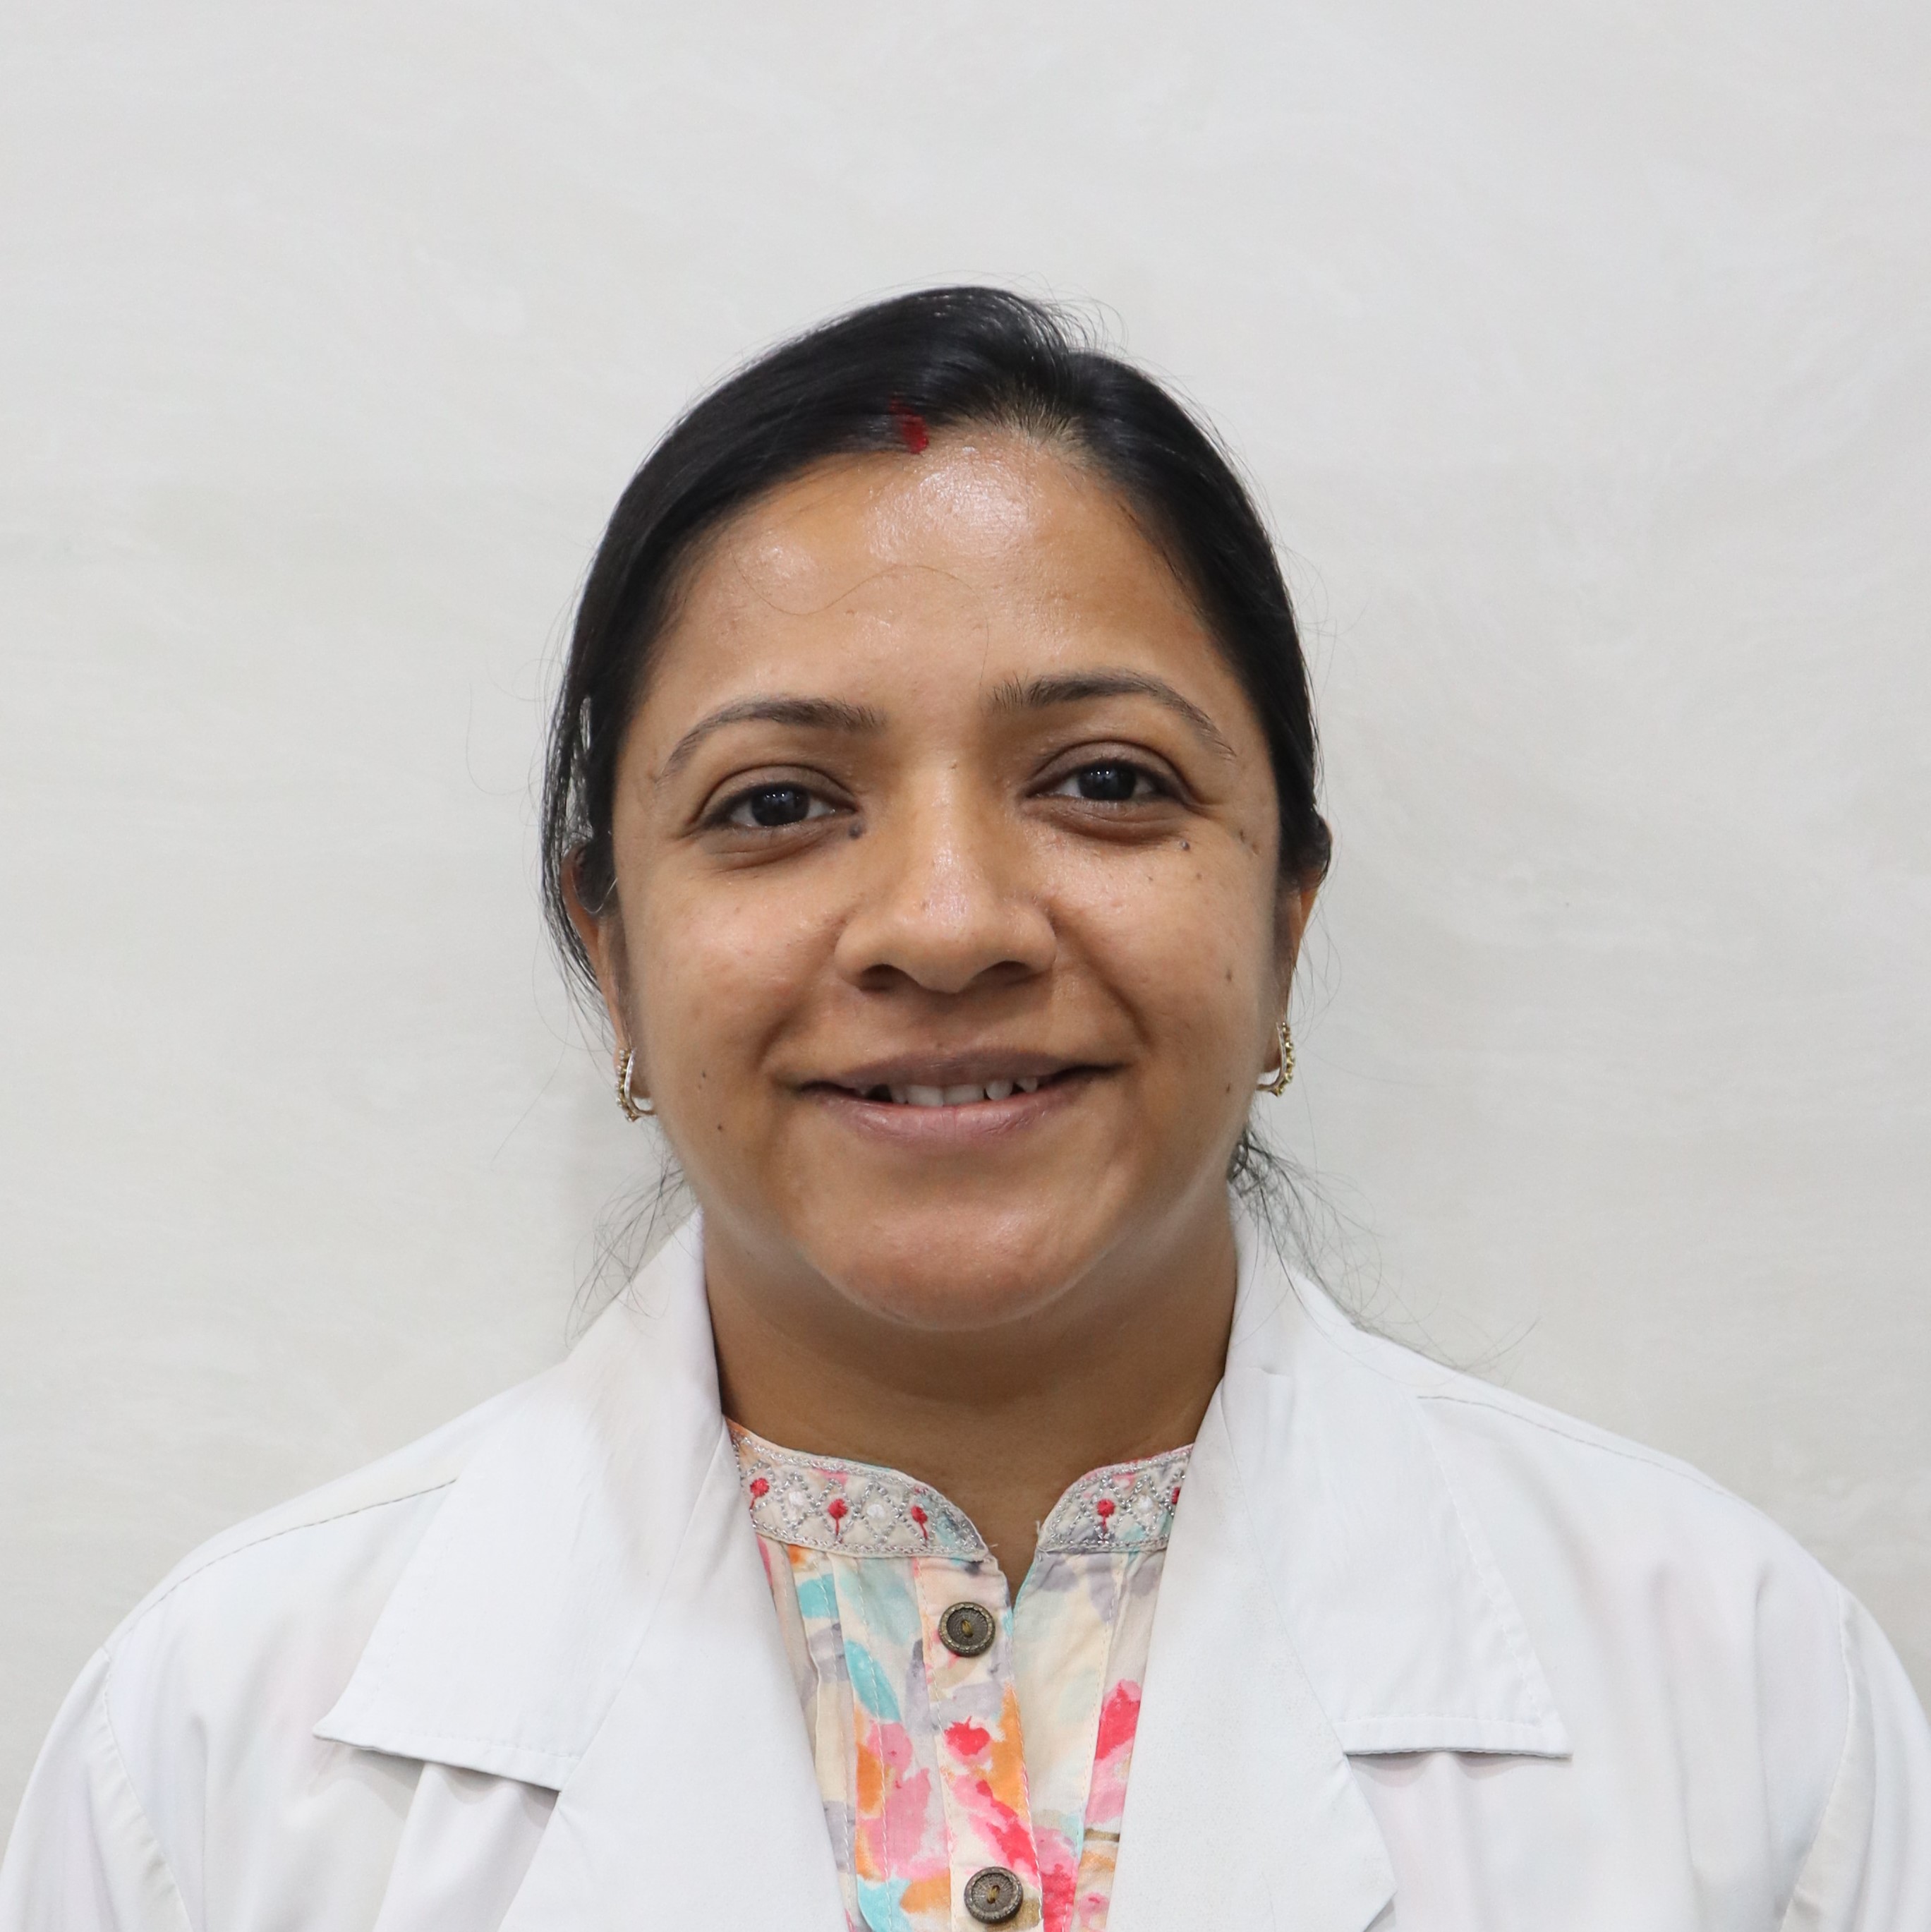 Dr. Nisha Agrawal